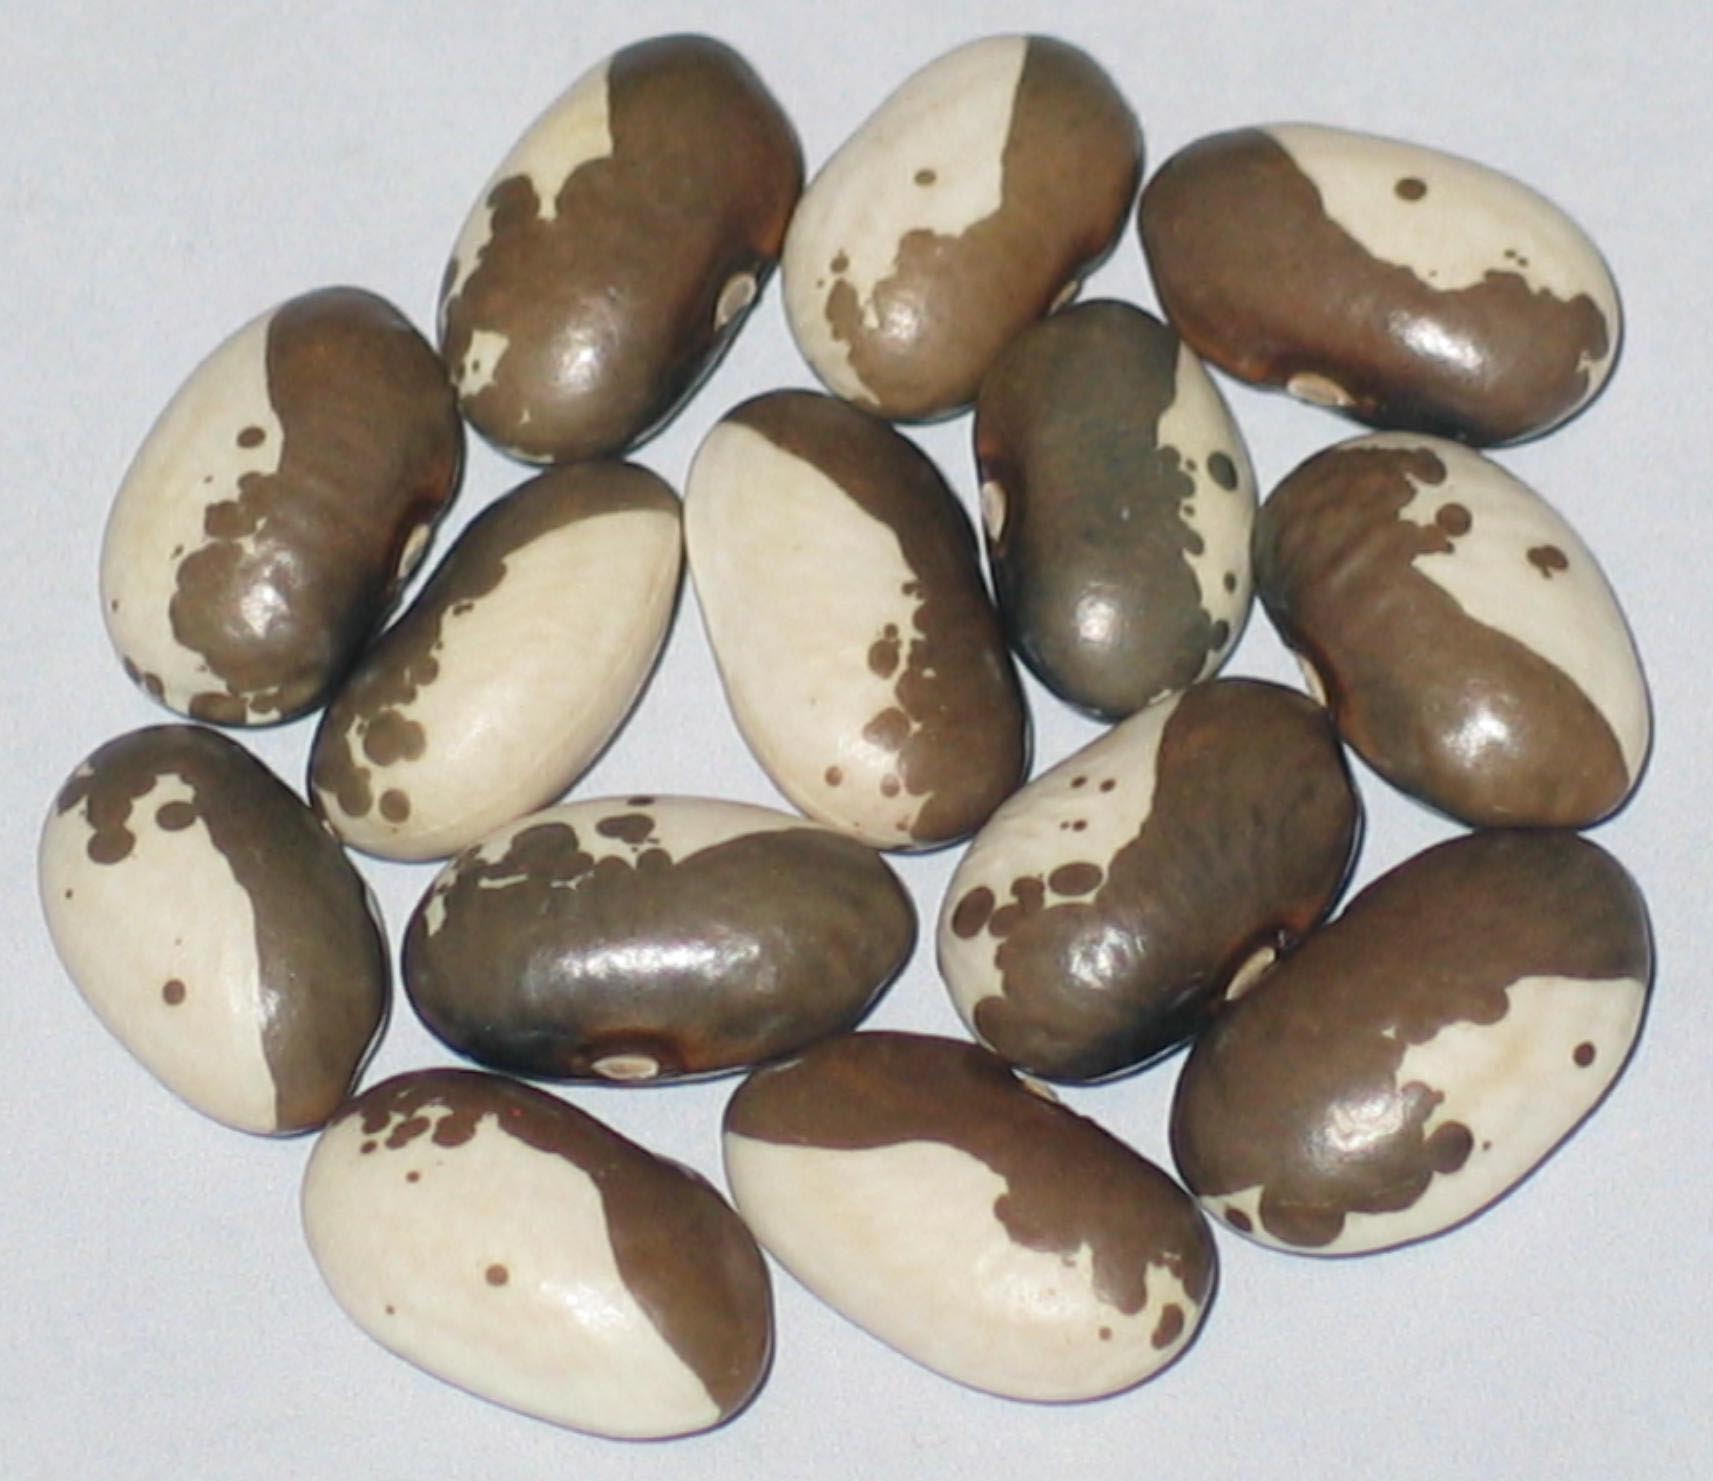 image of Seda Kravicka beans